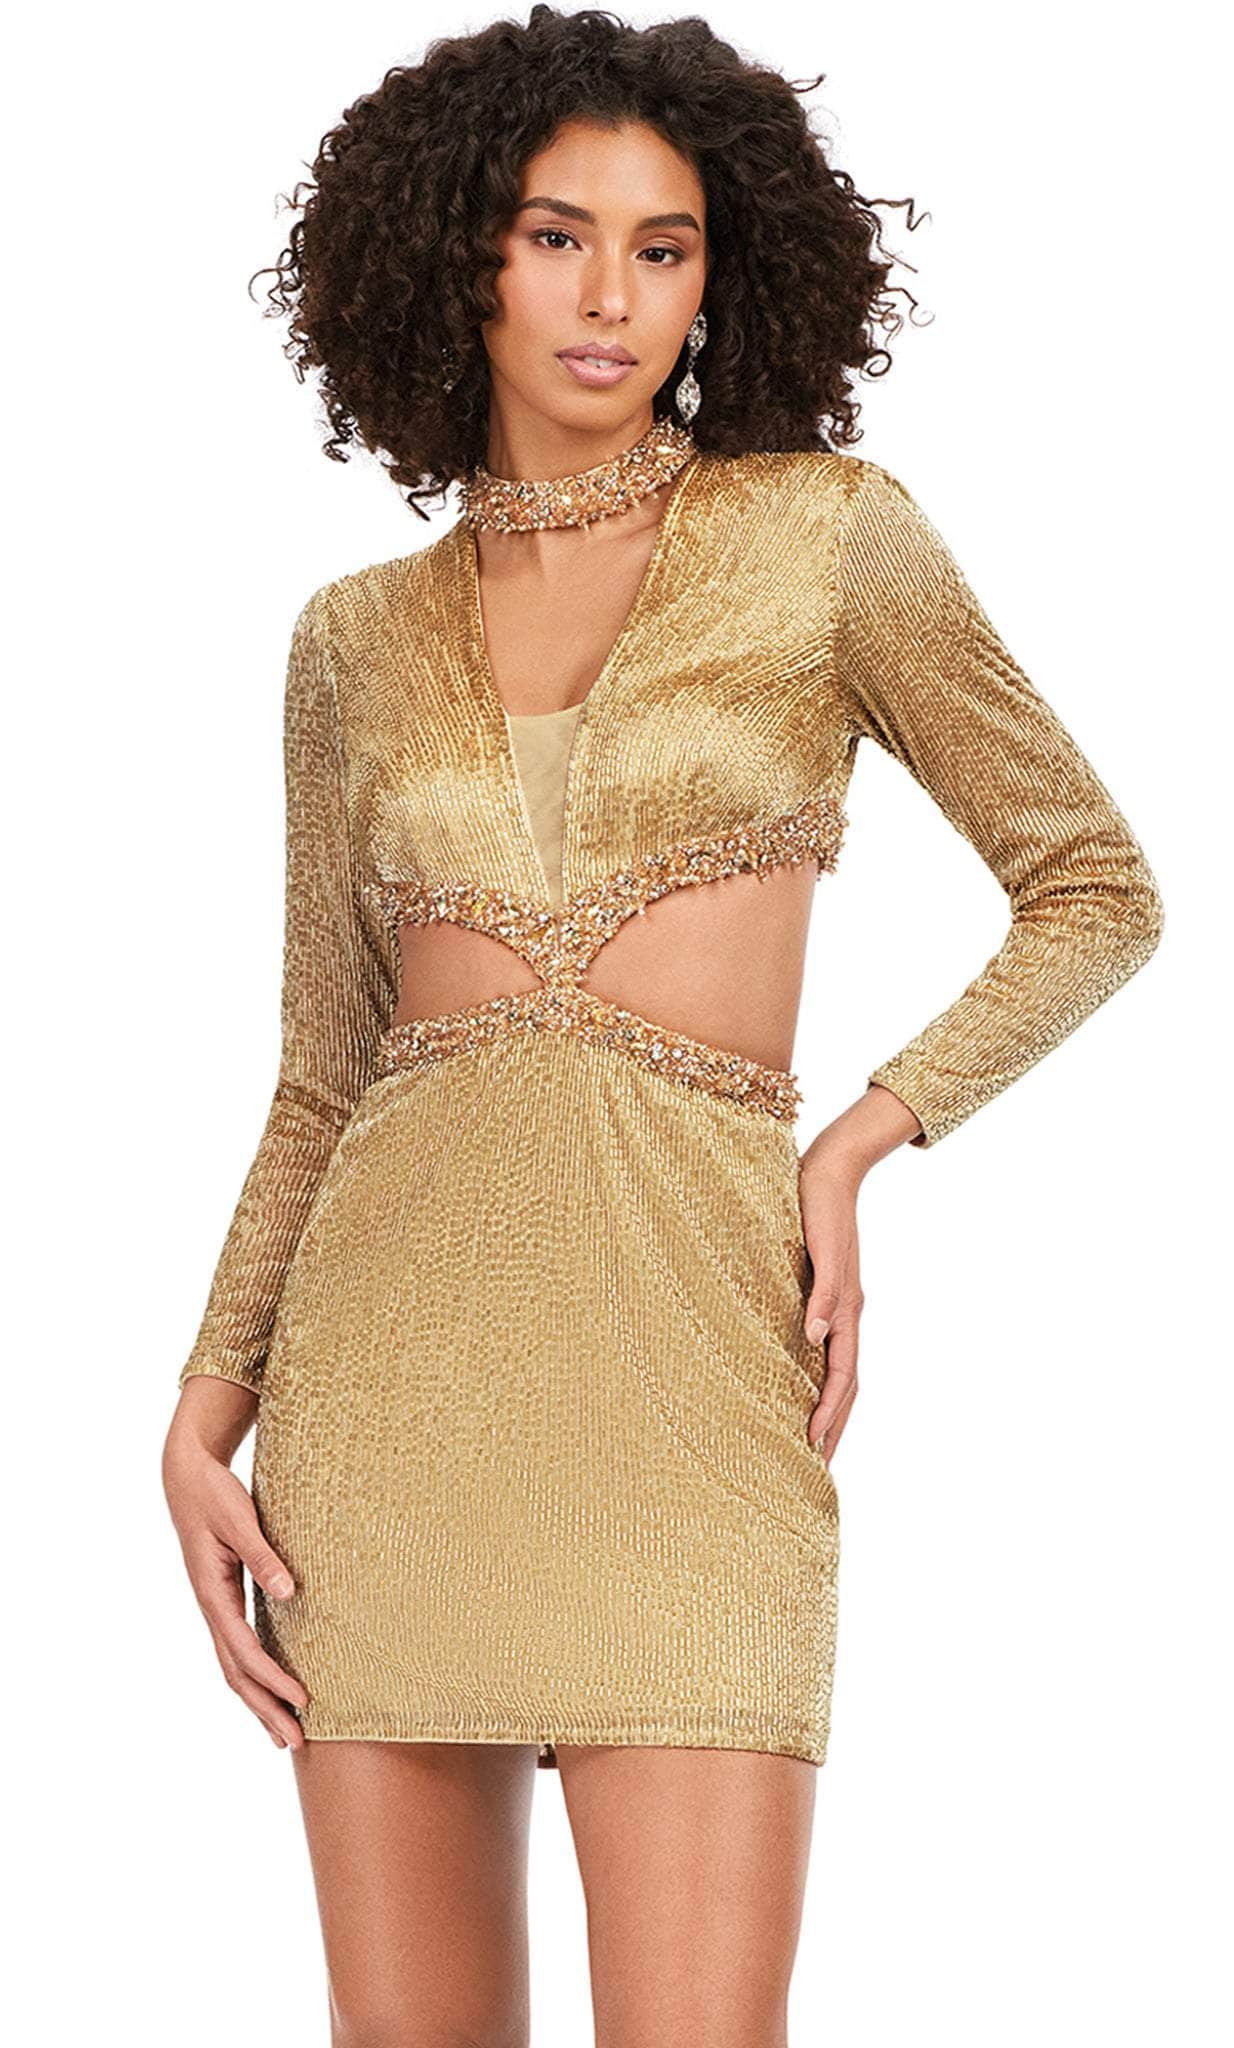 ashley lauren 4583 - long sleeve dress